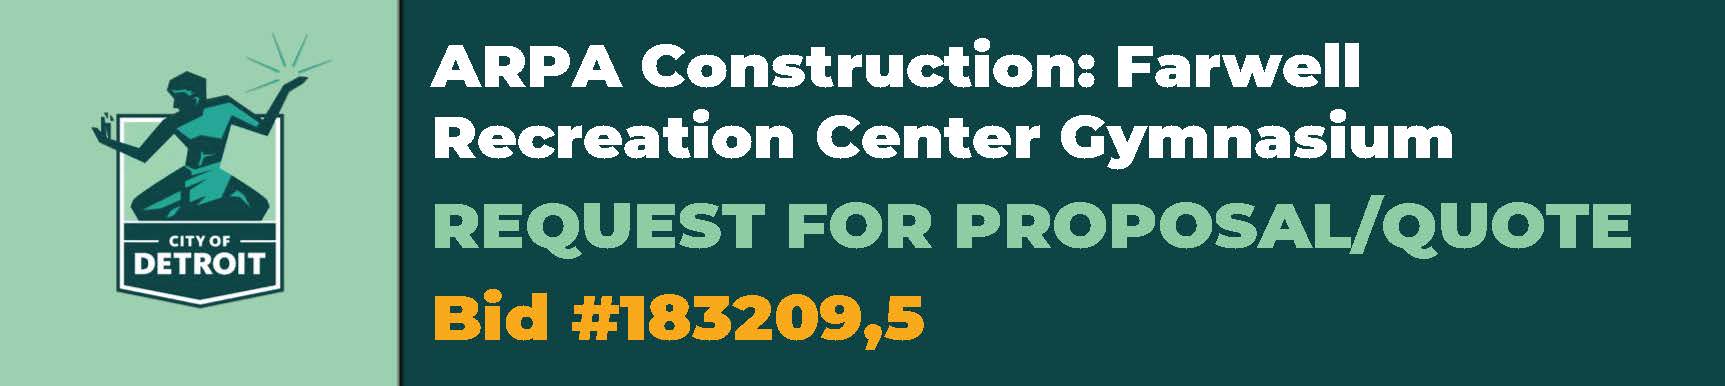 ARPA Construction: Farwell Recreation Center Gymnasium